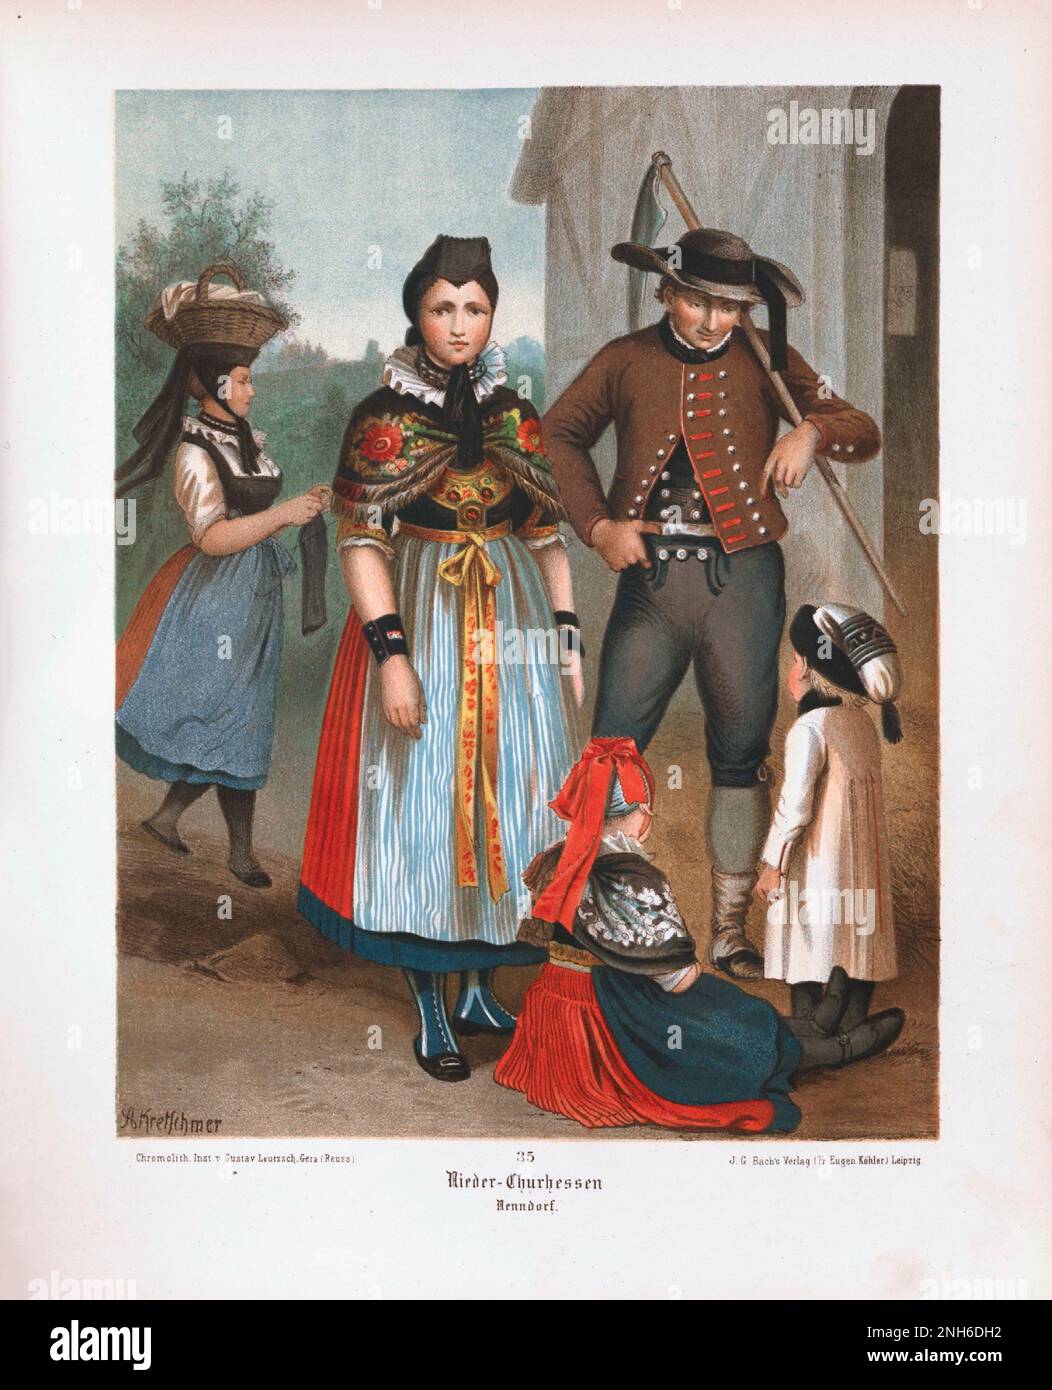 German folk costume. Nieder-Churhessen. 19th-century lithography. Stock Photo